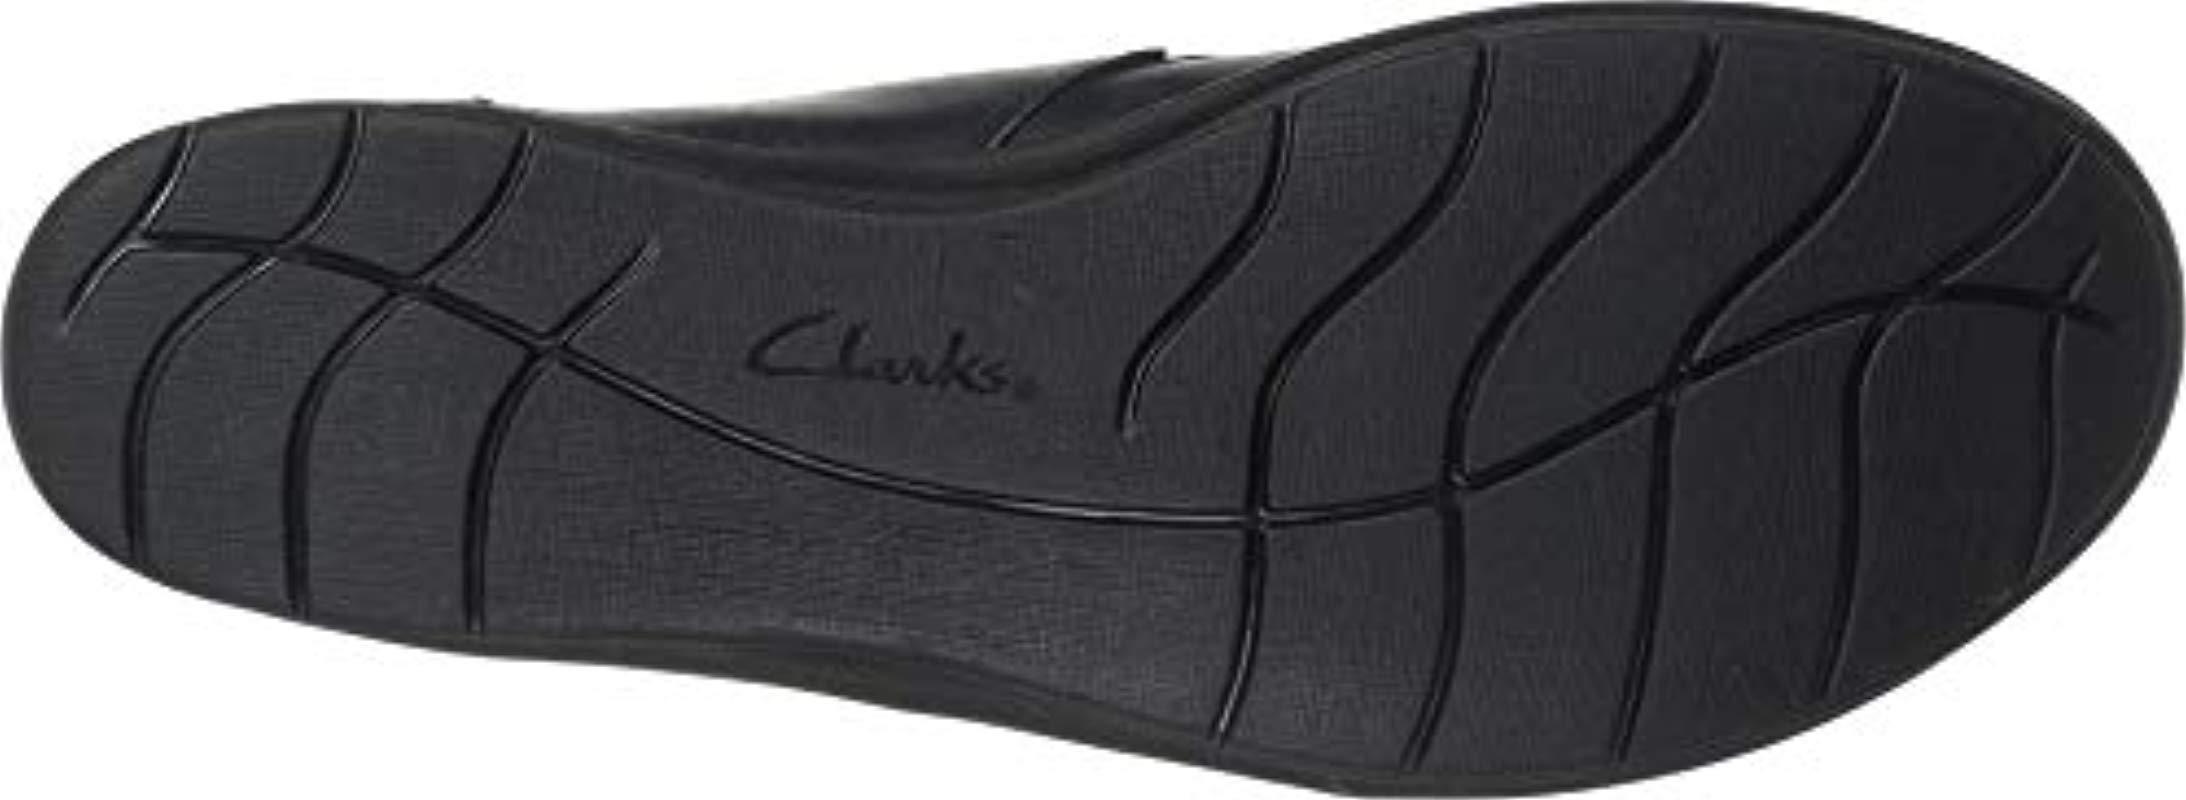 clarks women's hope race loafer